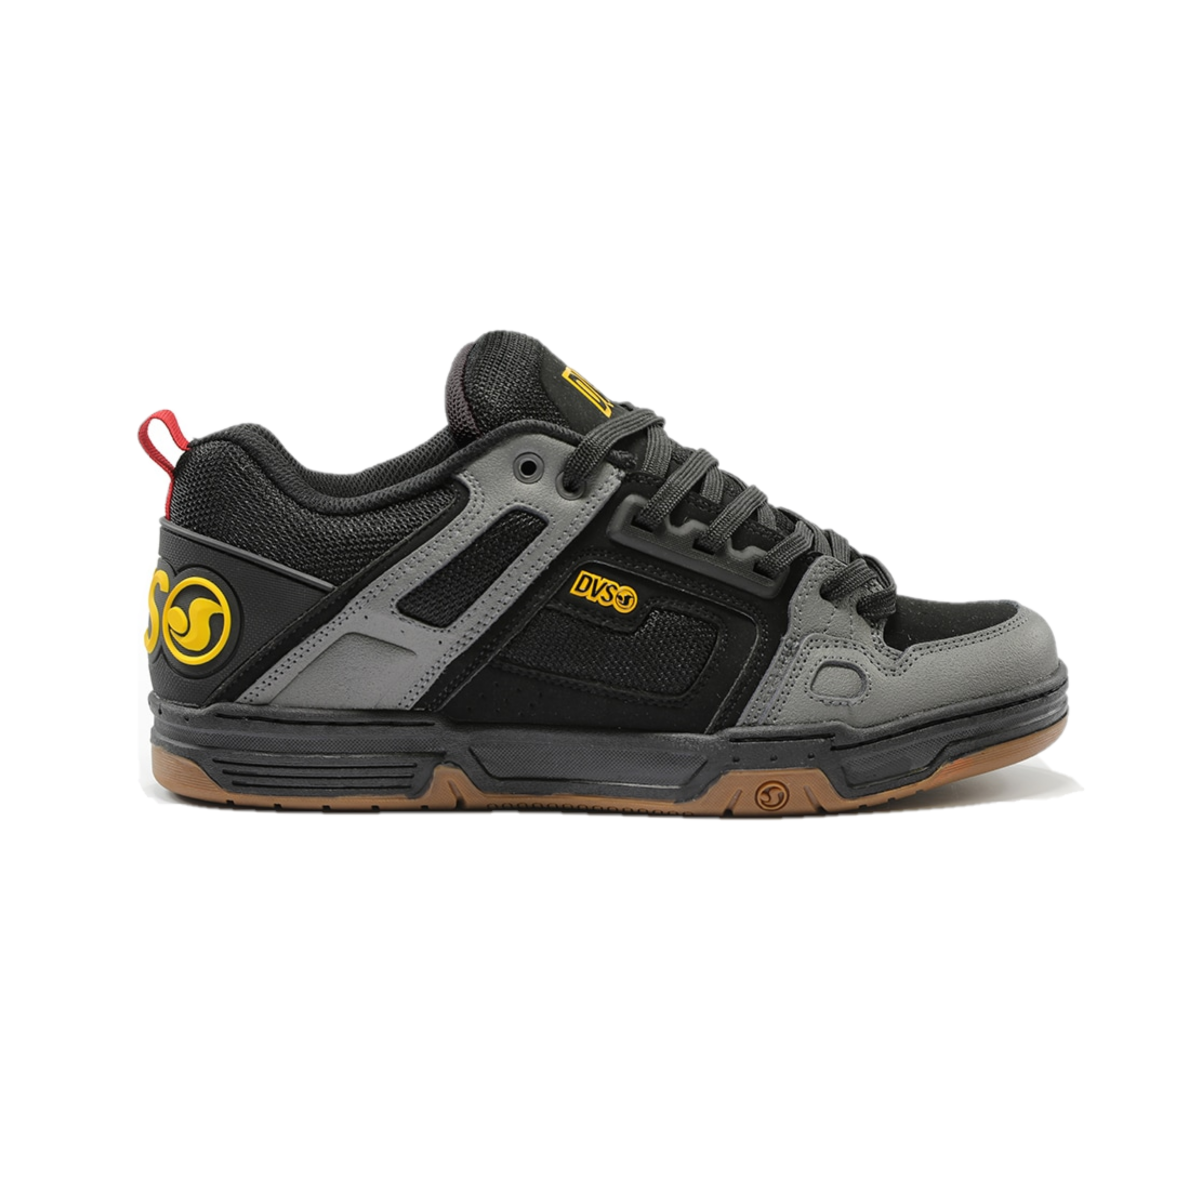 DVS F0000029995 COMANCHE MN'S (Medium) Black/Charcoal/Gum Leather & Nubuck Skate Shoes